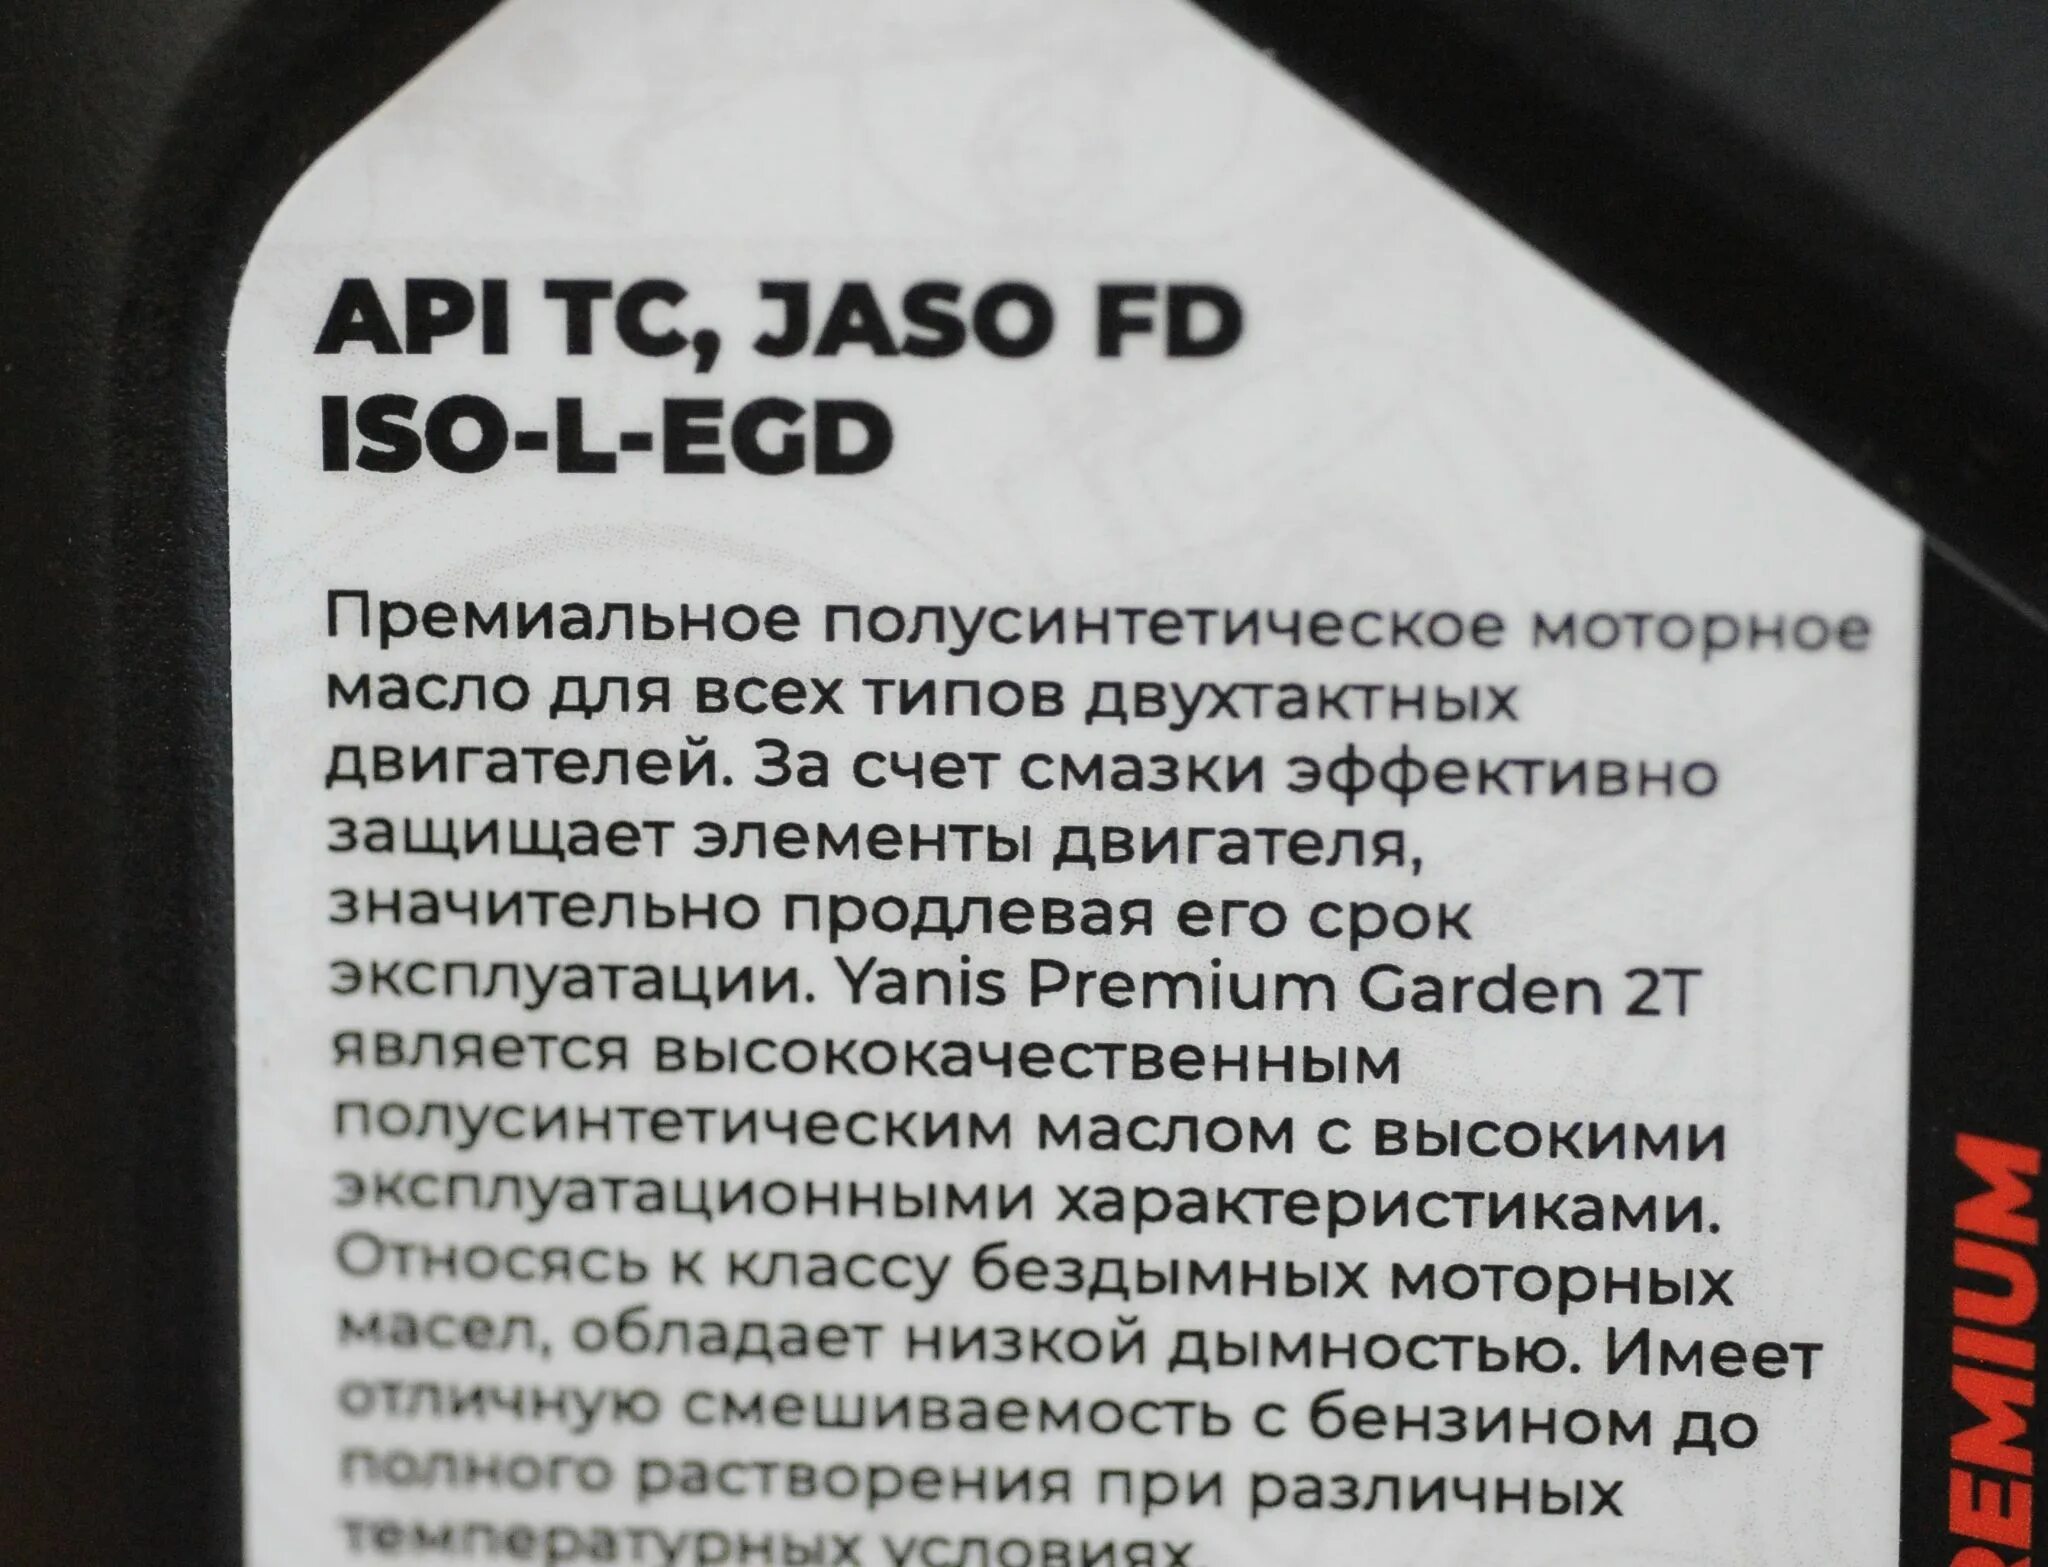 Масло ISO-L-EGD. Jaso FD масло 2 тактное. Моторное масло 2-тактное API TC Jaso FD 1л. Стандарты Jaso для моторных масел. Api jaso